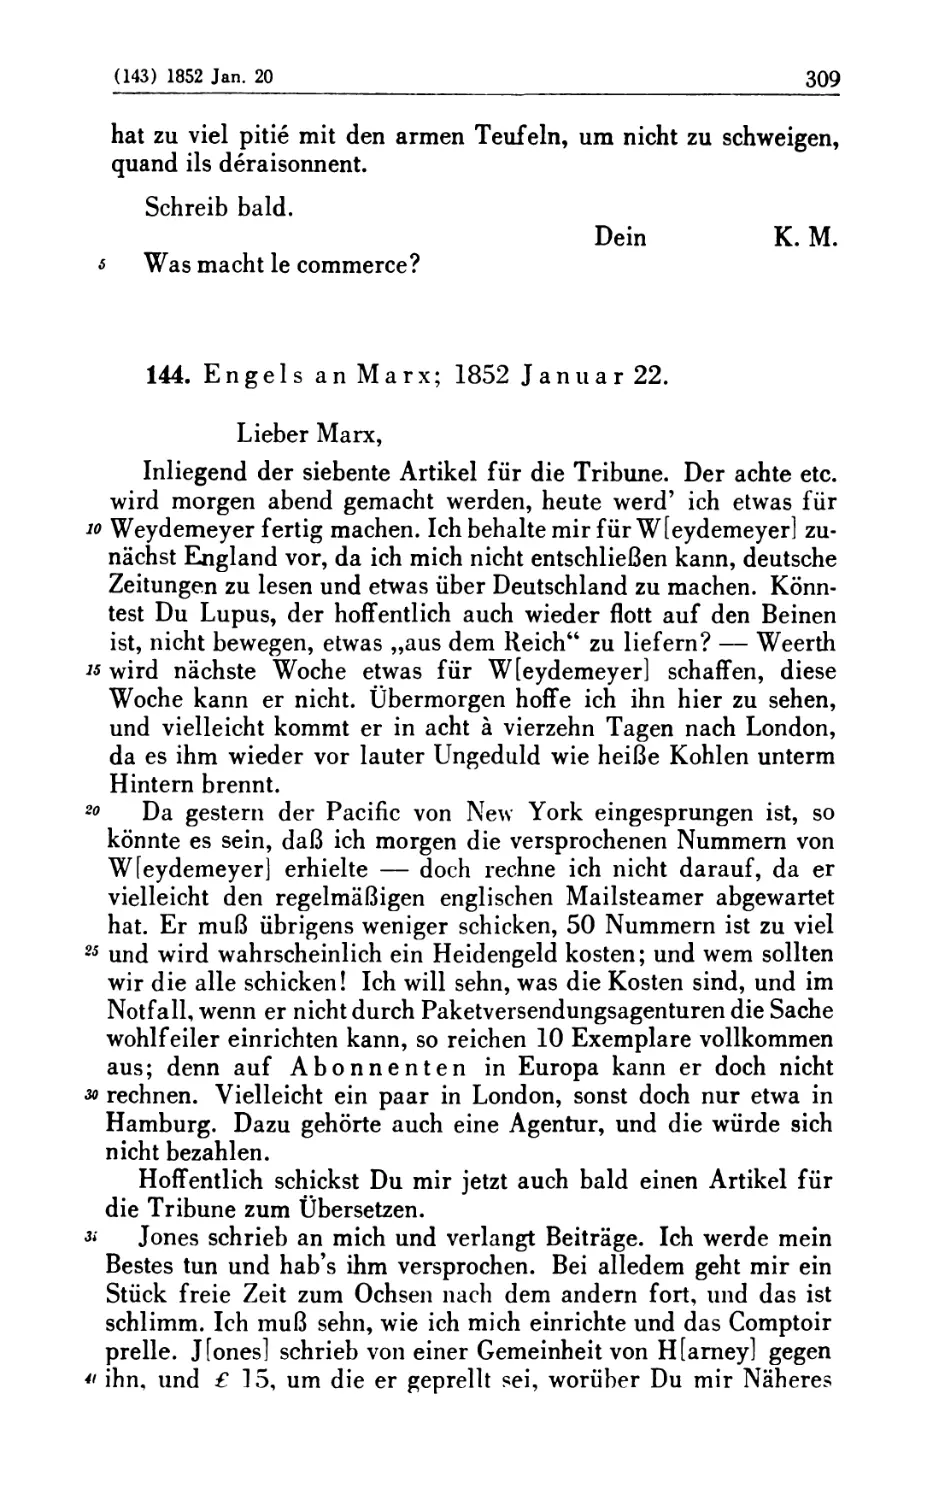 144. Engels an Marx; 1852 Januar 22